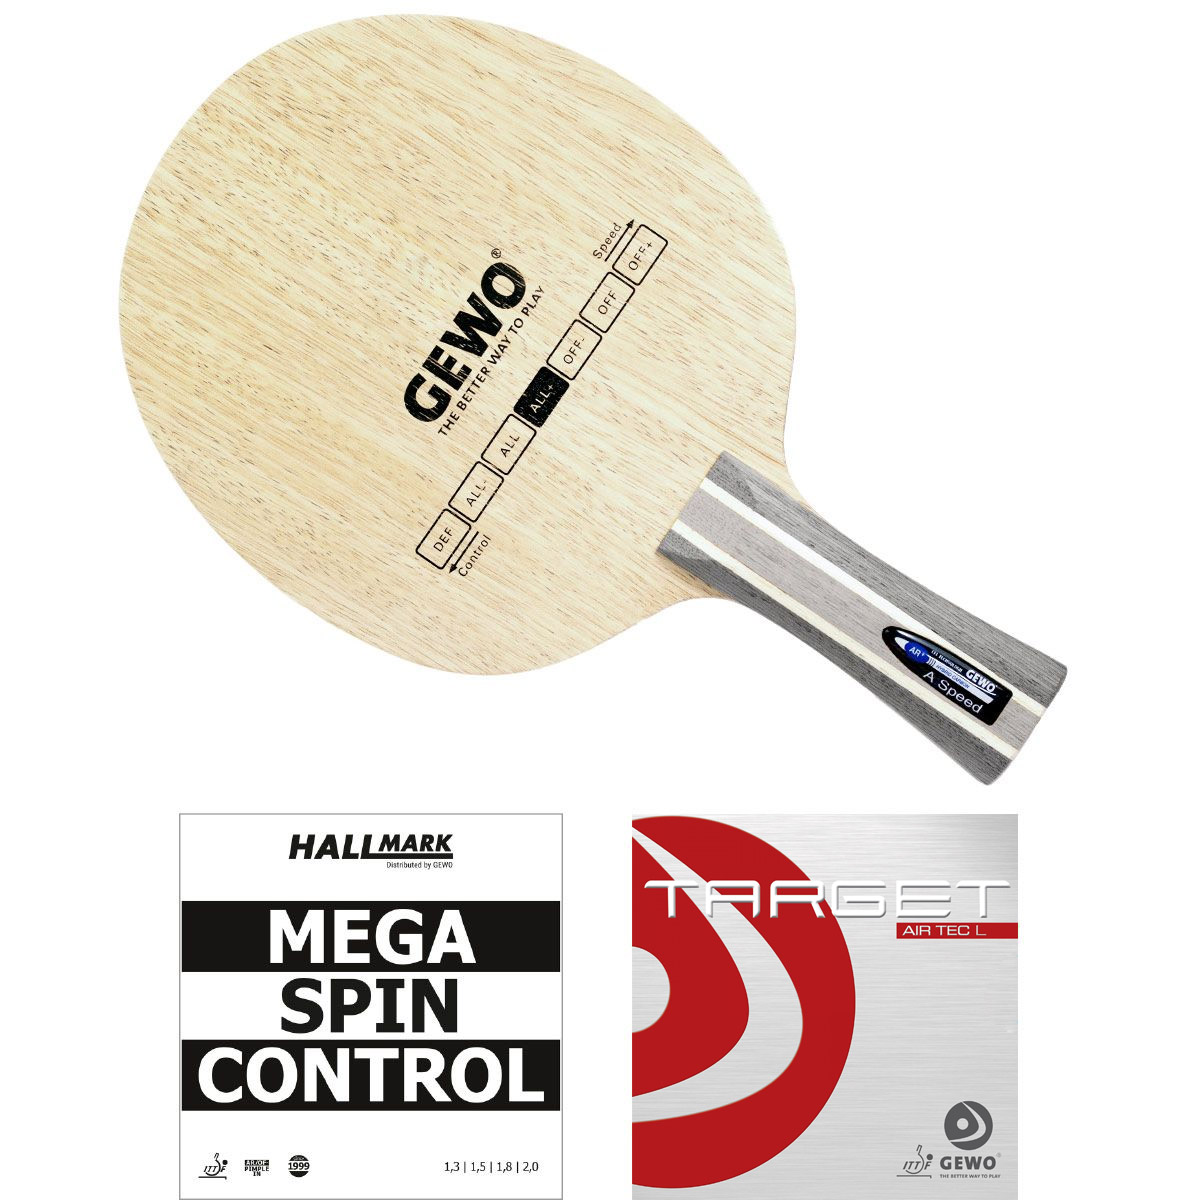 GEWO Bat: Blade Hybrid Carbon A/Speed with Mega Spin Control + Target airTEC L